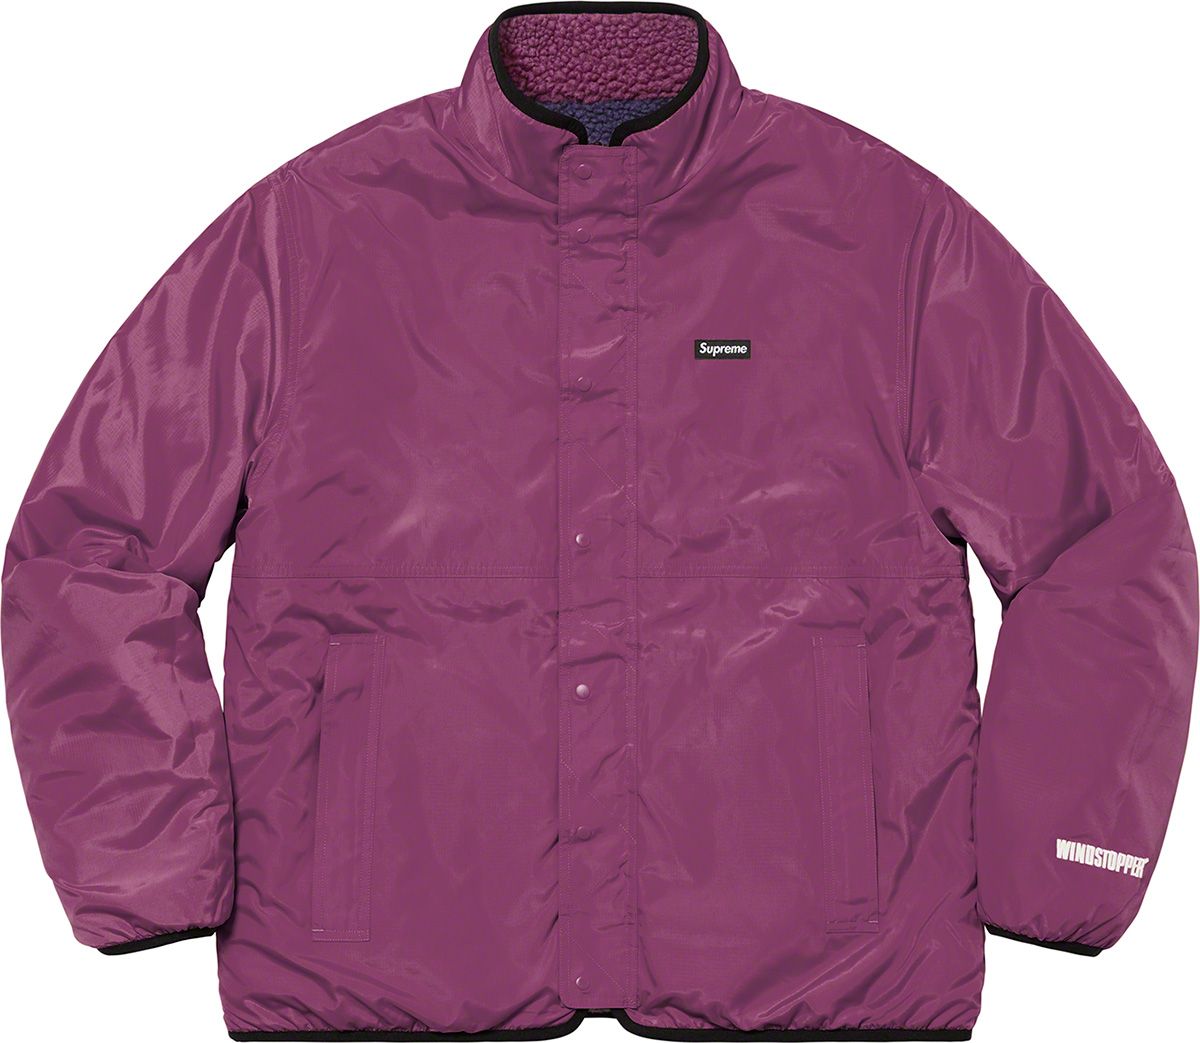 Reversible Colorblocked Fleece Jacket - Fall/Winter 2020 Preview